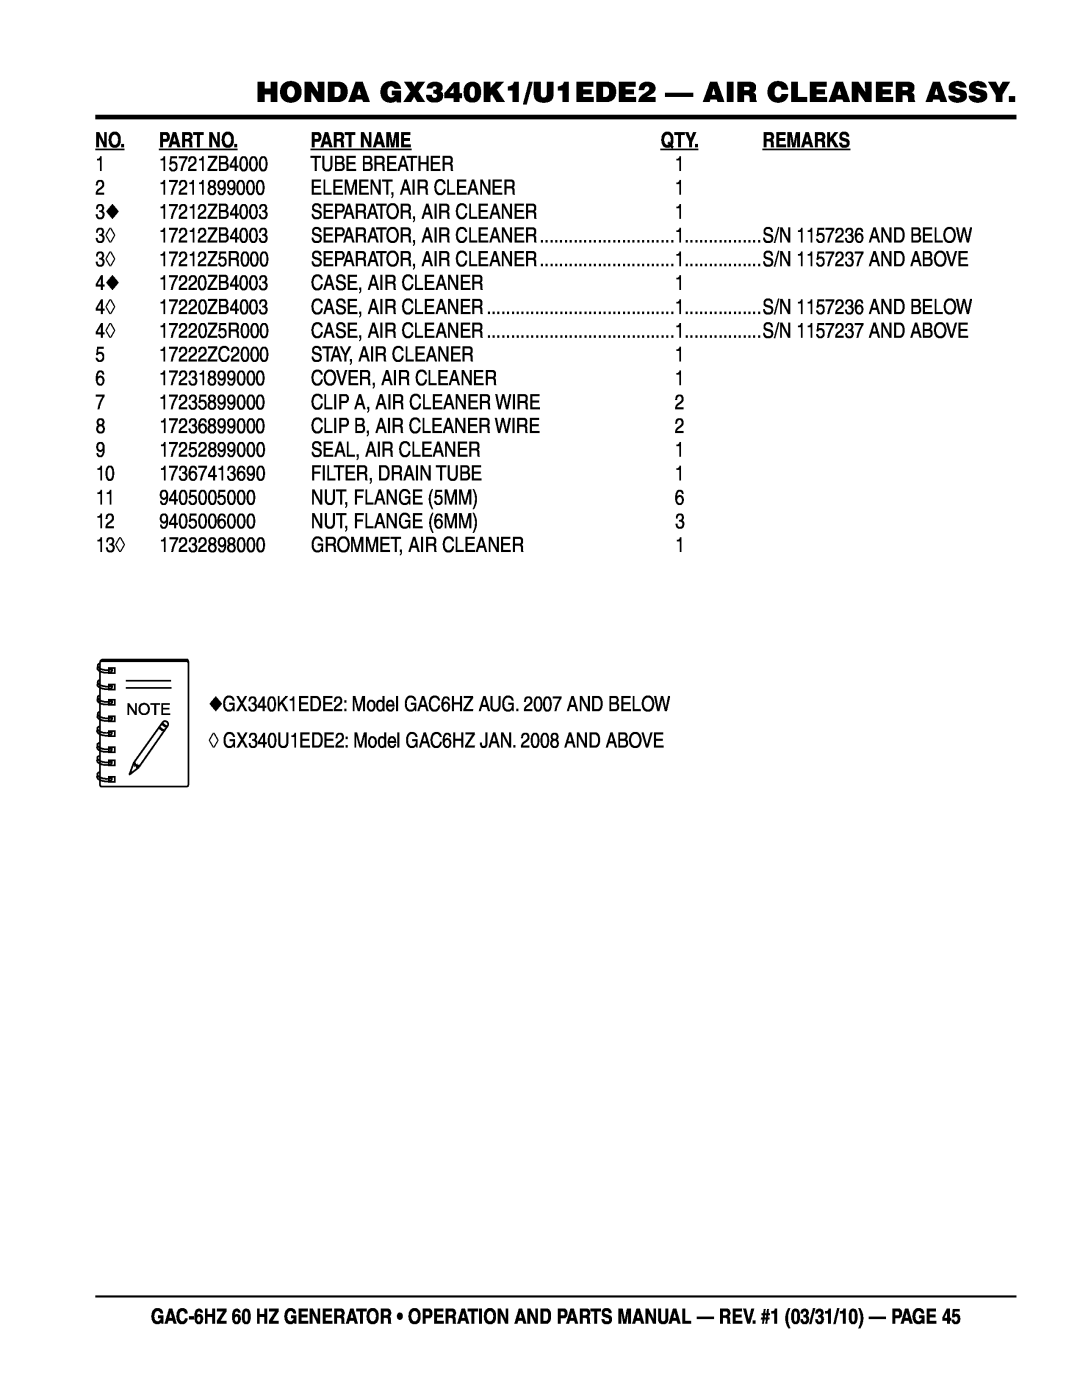 Multiquip GAC6HZ manual HONDA GX340K1/U1EDE2 - AIR CLEANER ASSY, Part Name, Remarks 